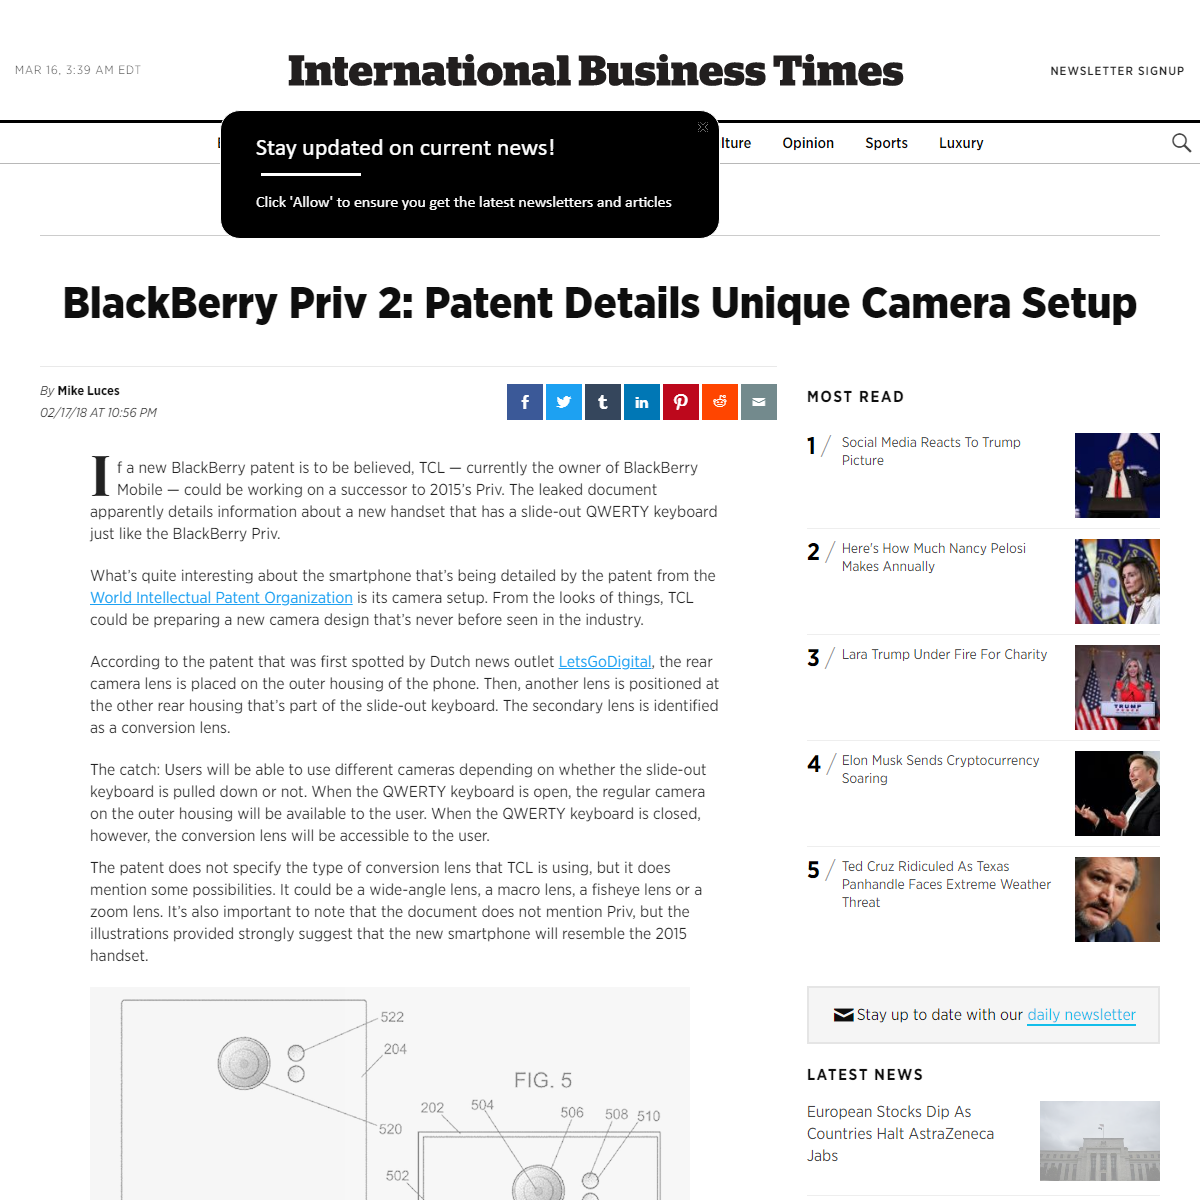 A complete backup of https://www.ibtimes.com/blackberry-priv-2-patent-details-unique-camera-setup-2654759